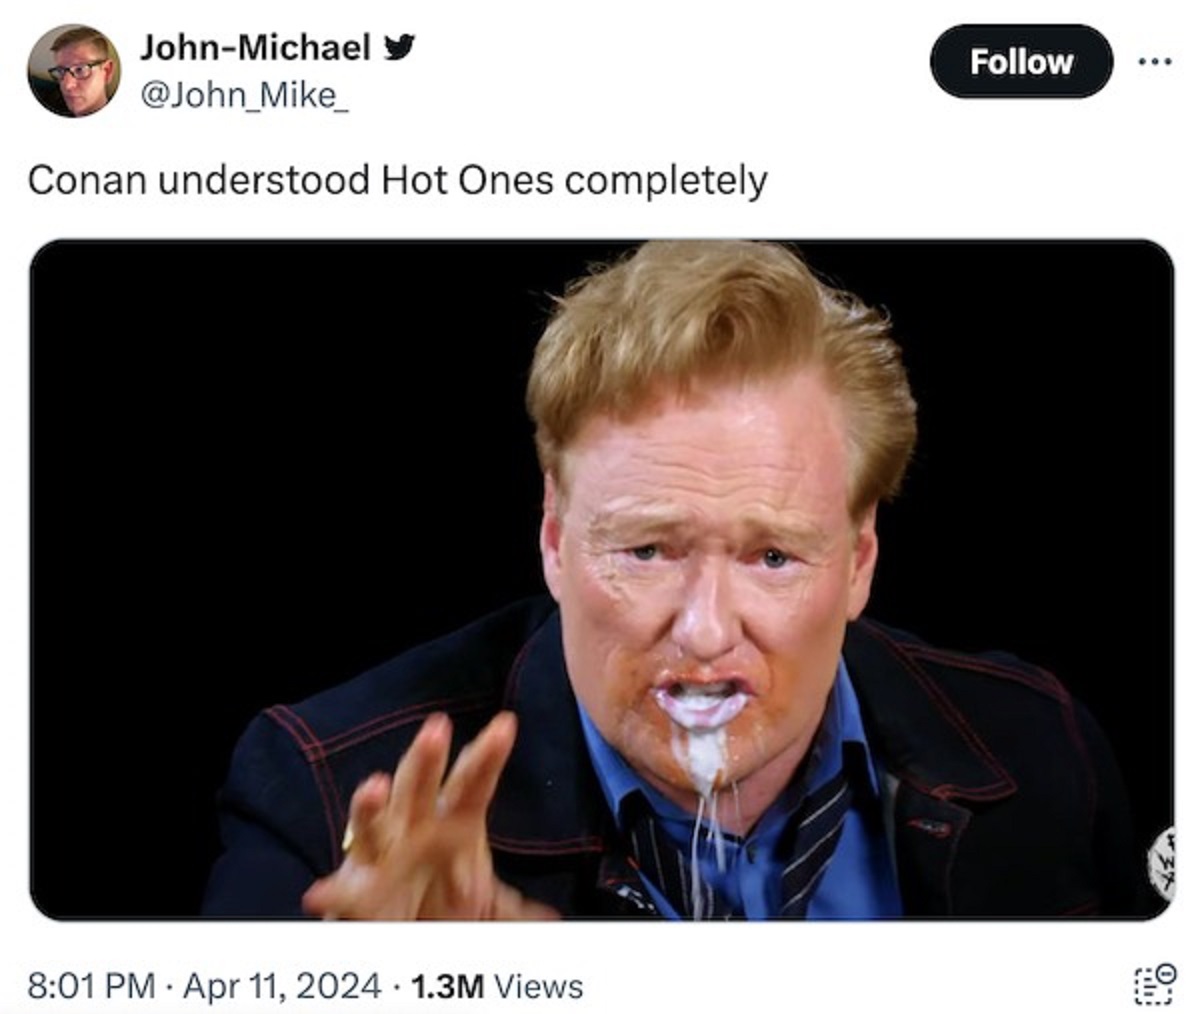 Conan O'Brien - JohnMichael Conan understood Hot Ones completely 1.3M Views 0